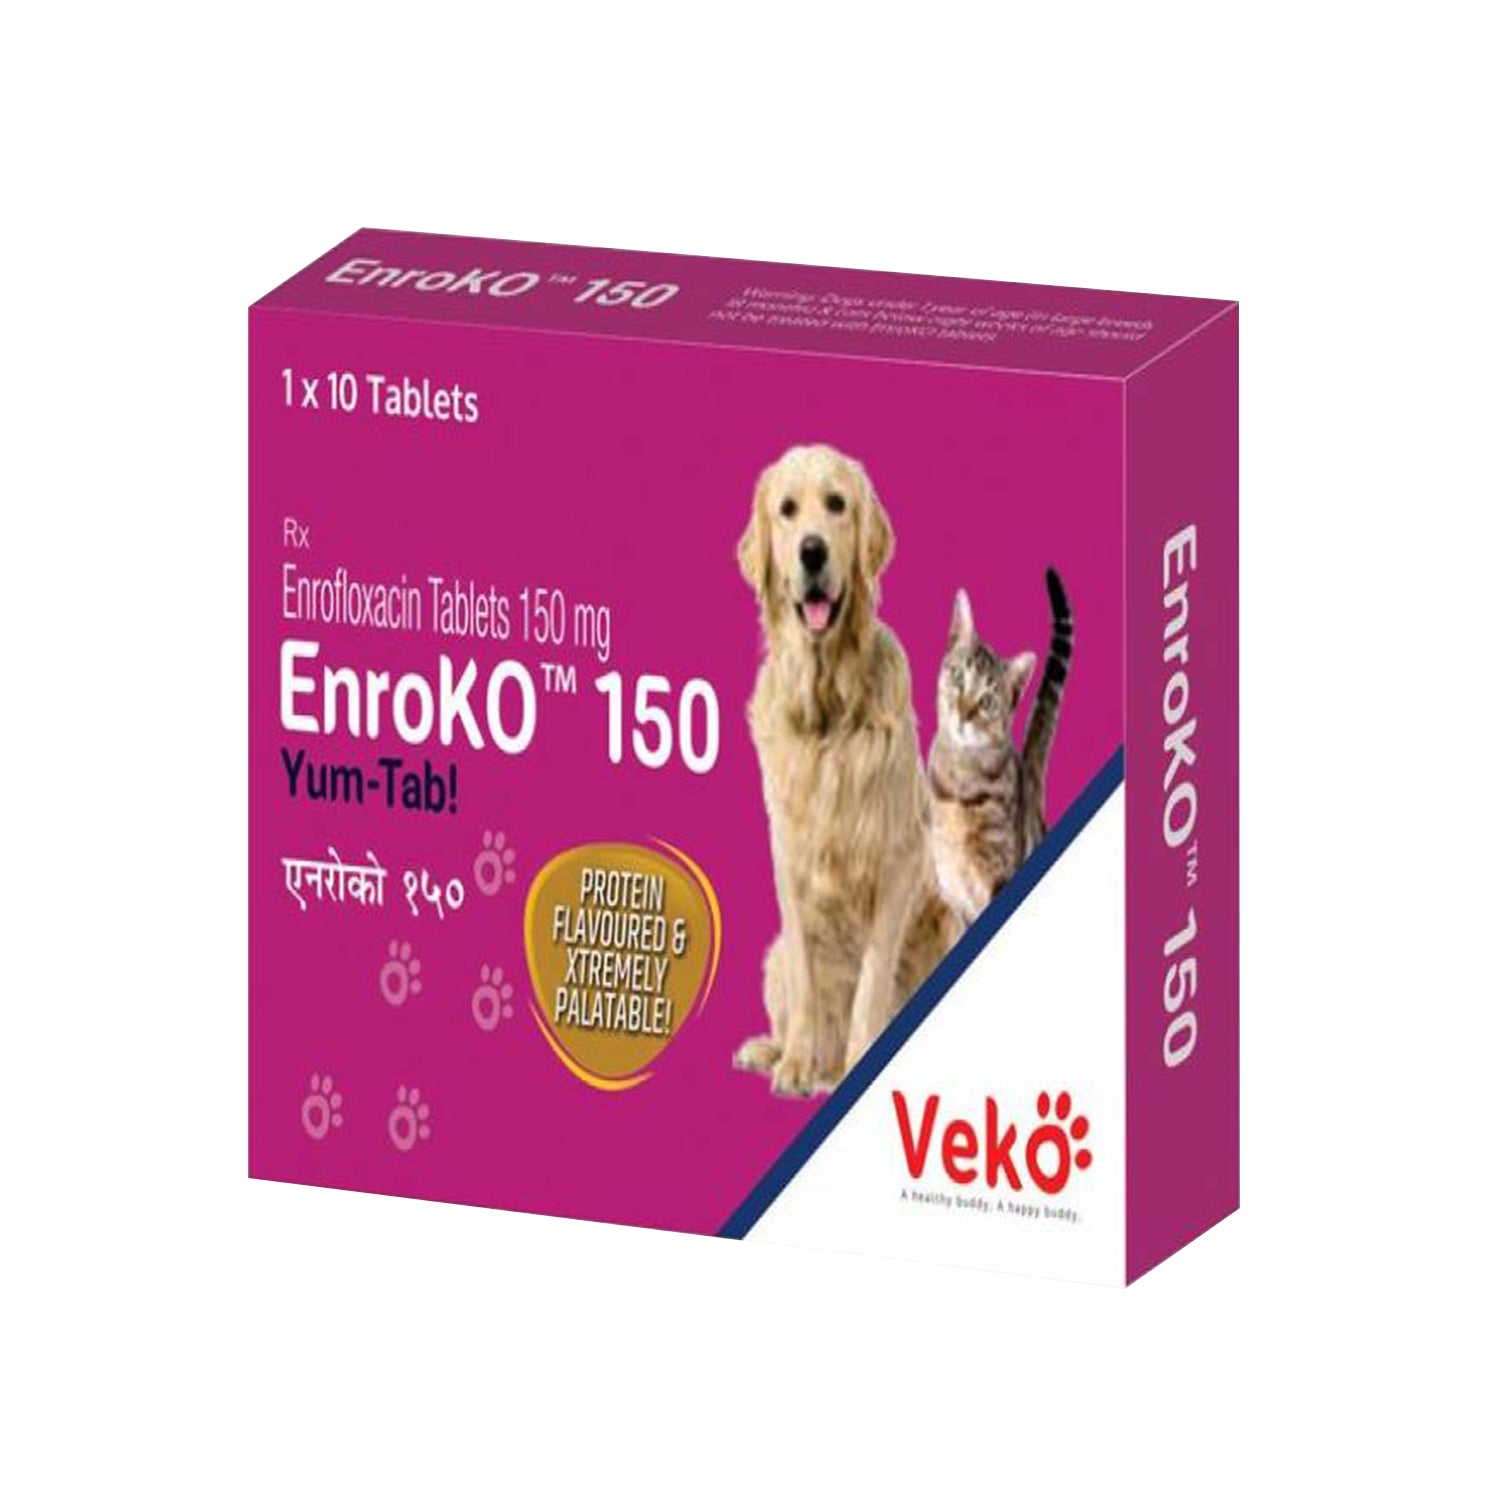 Veko Care - Enroko Tablets – PetKonnect